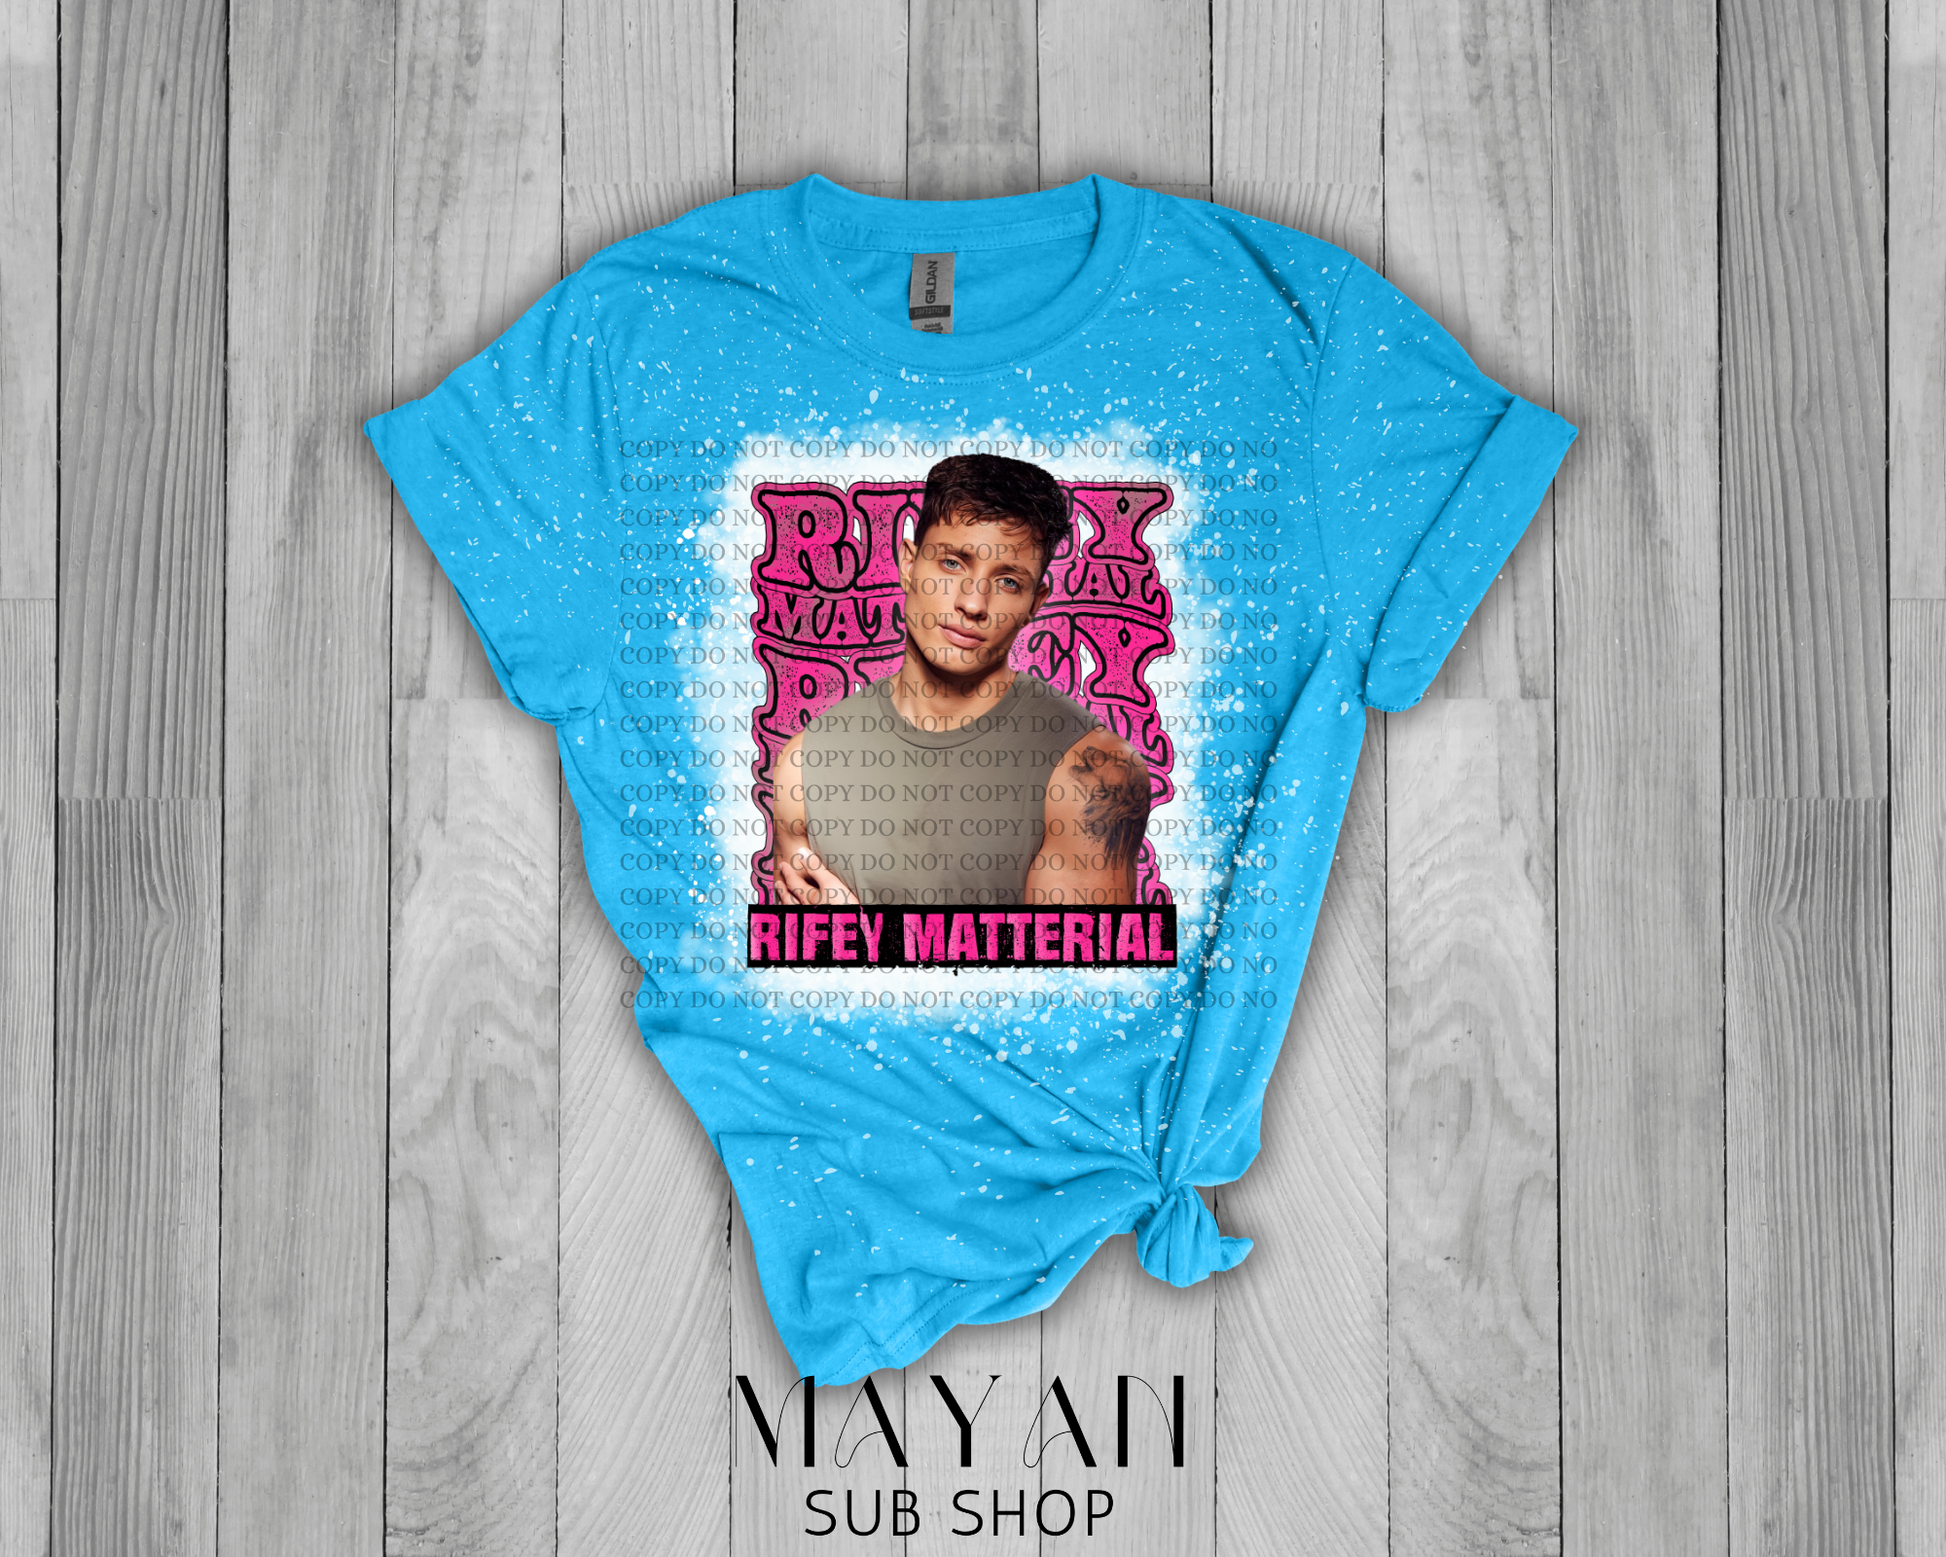 Riffey Matterial Pink Bleached Shirt - Mayan Sub Shop